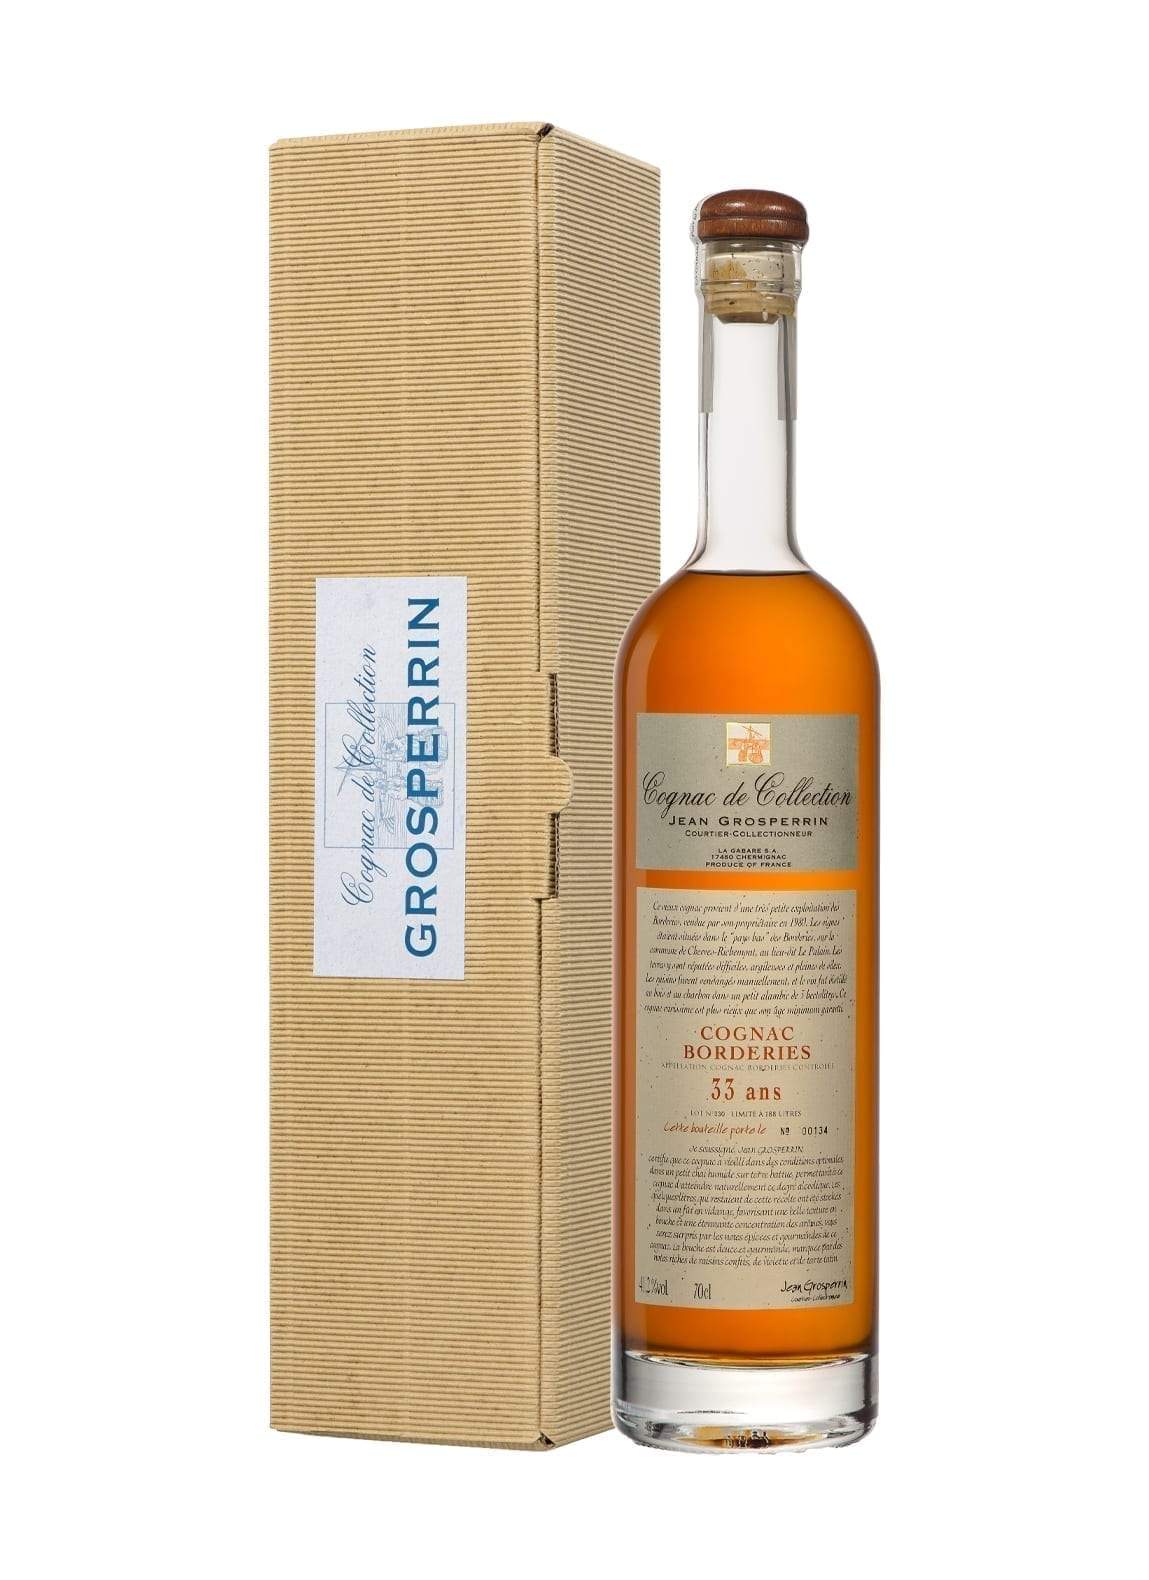 Grosperrin 'Cognac De Collection' 33 years 41.9% 700ml | Brandy | Shop online at Spirits of France